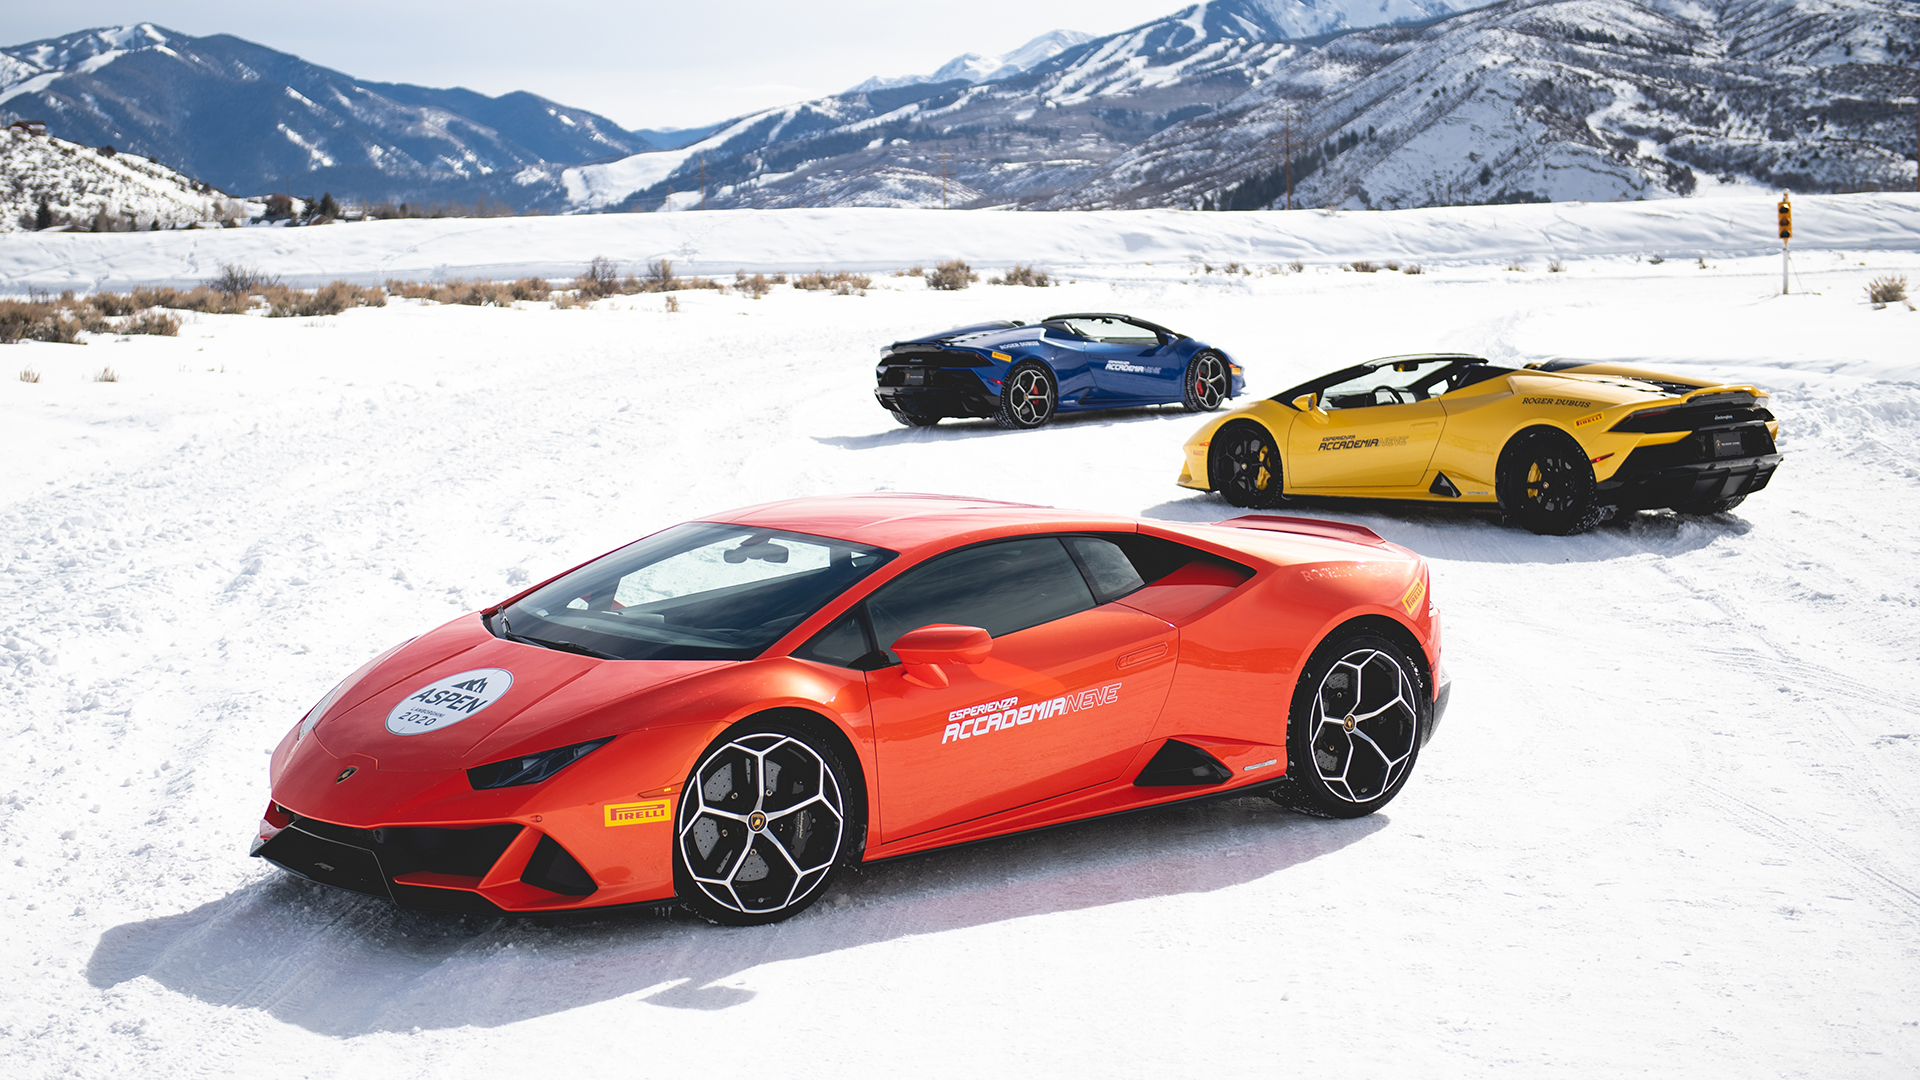 Lamborghini Winter Driving Experience Goes to Aspen